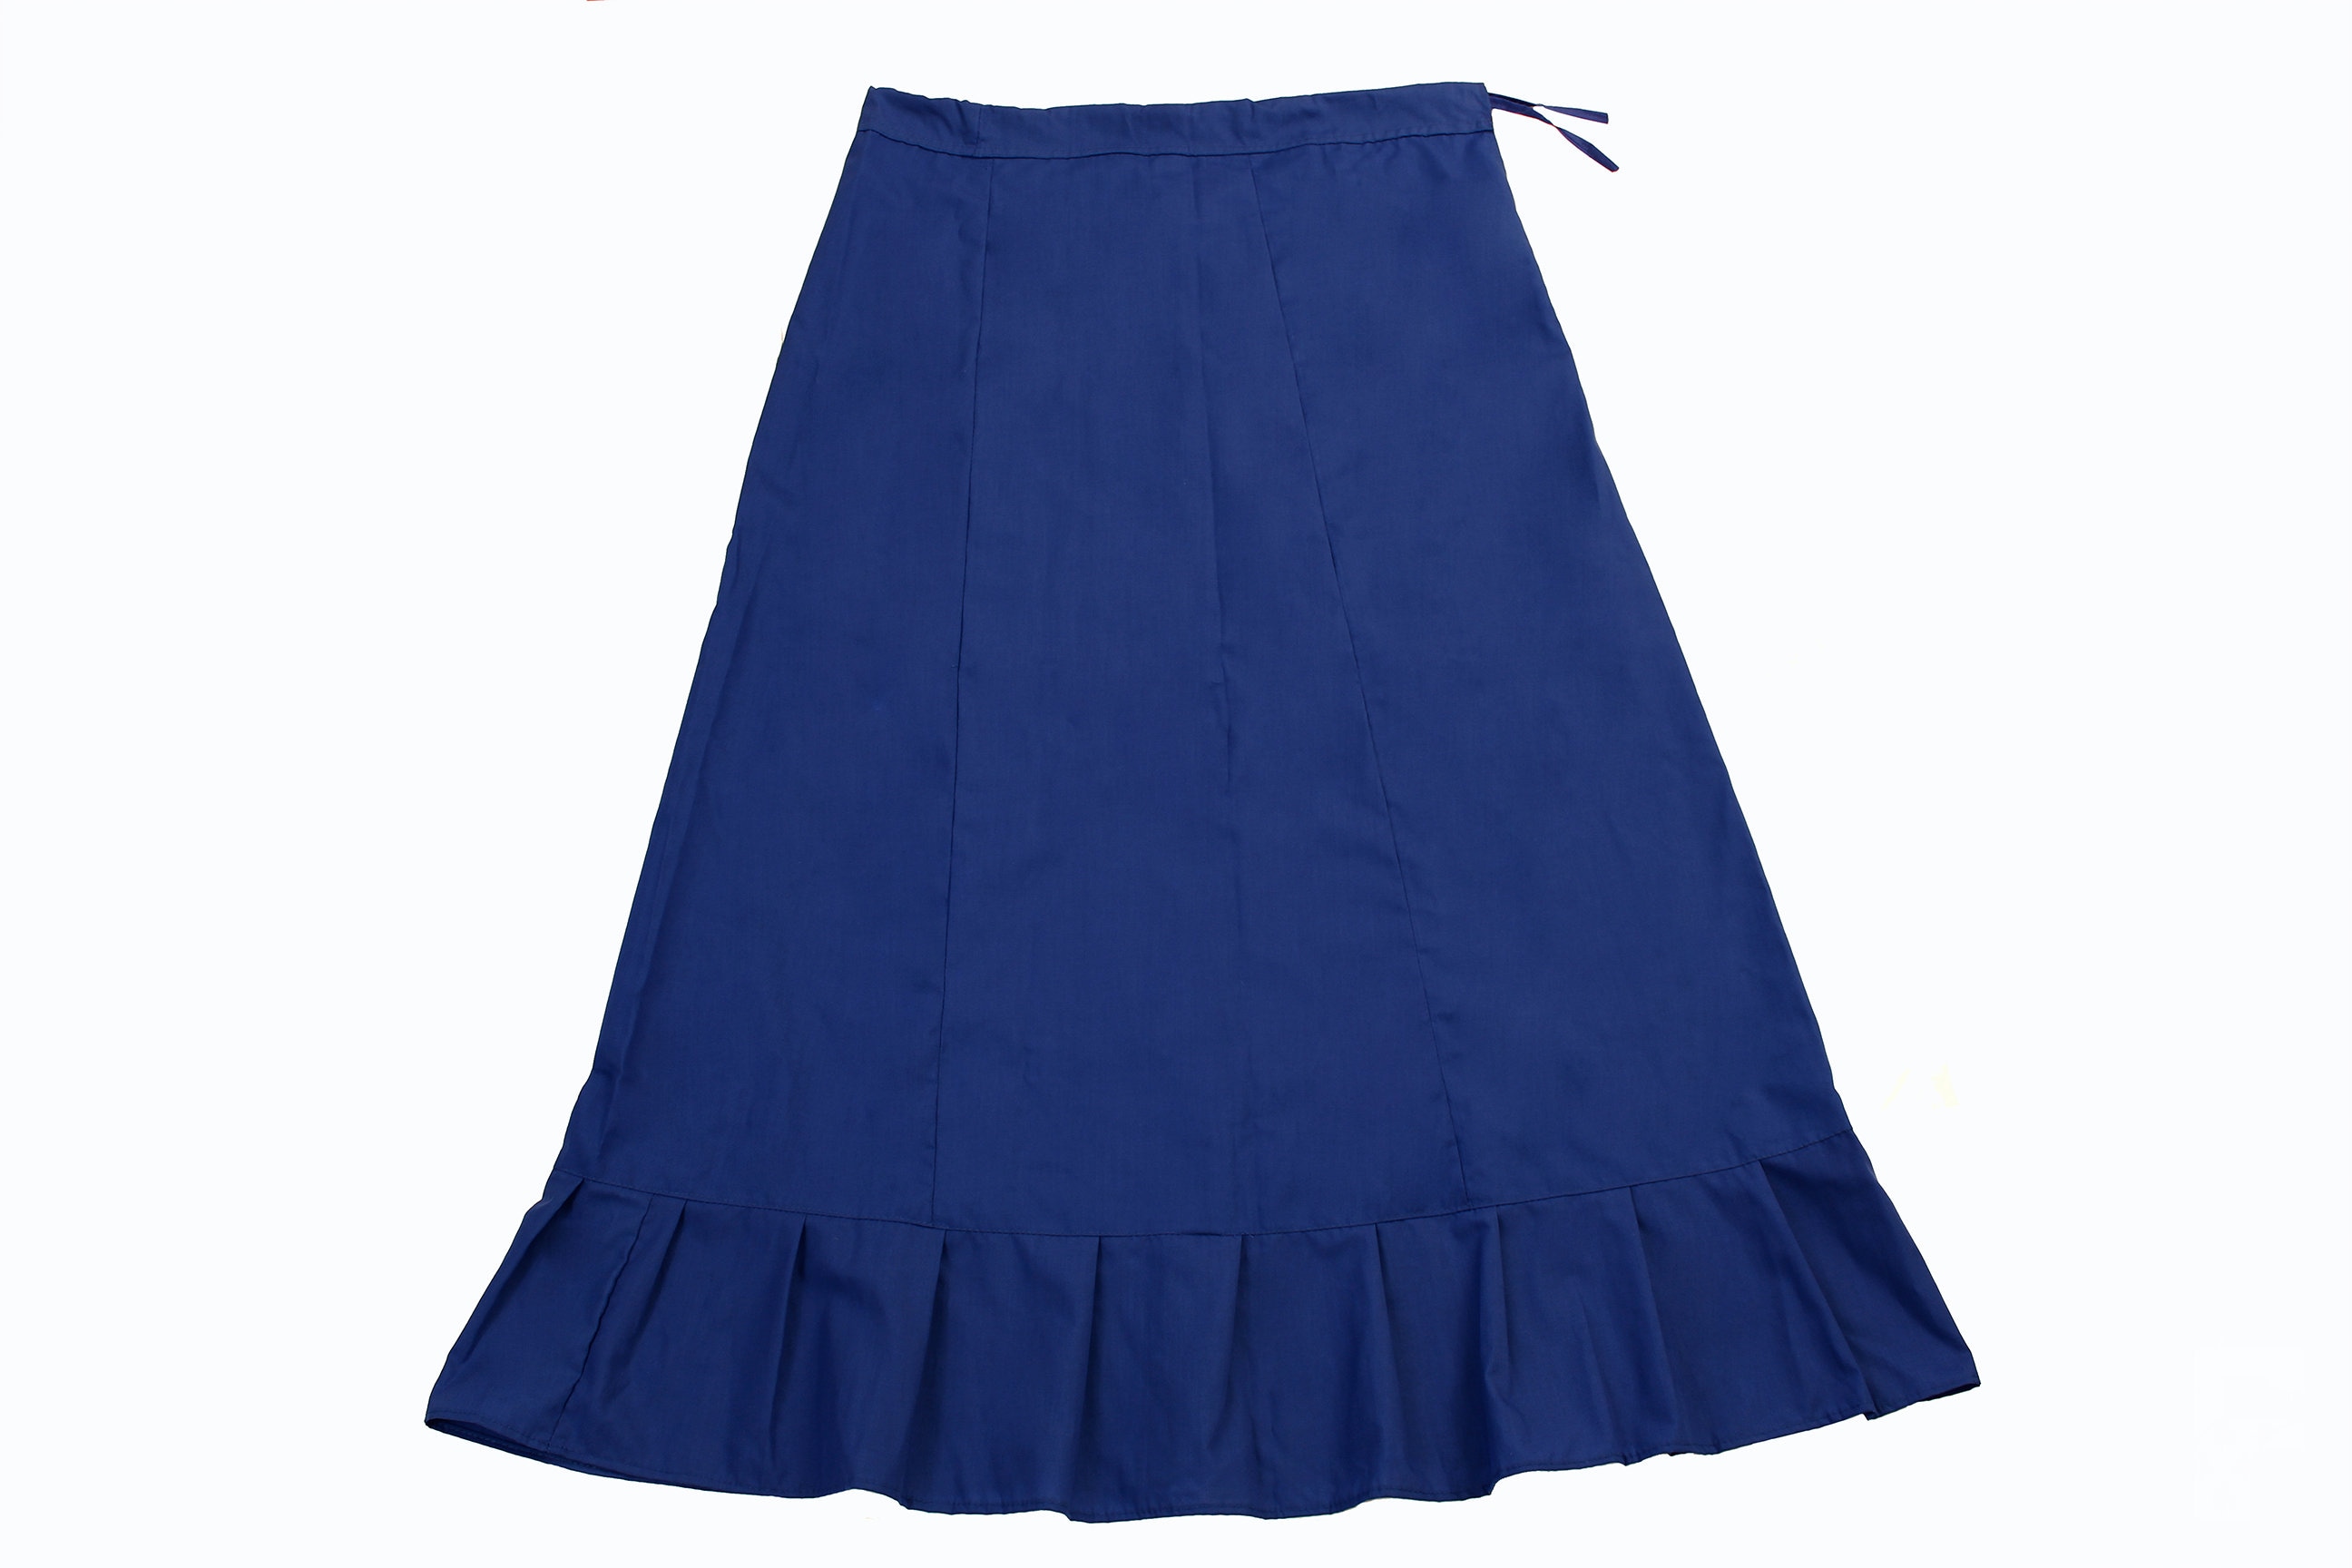 Blue - Sari (Saree) Petticoat - Available in S, M, L & XL - Underskirt